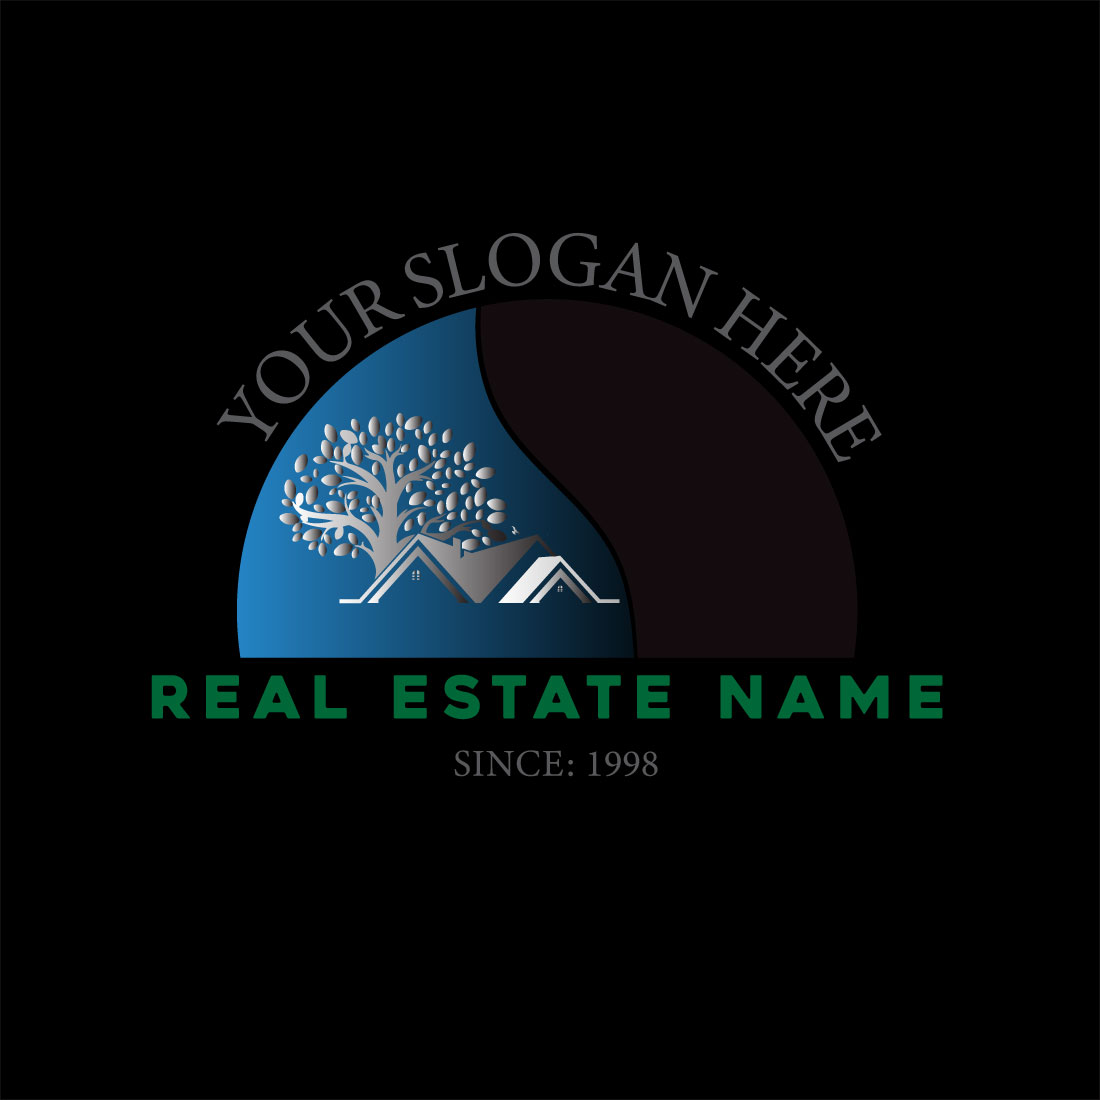 Real estate logo preview image.